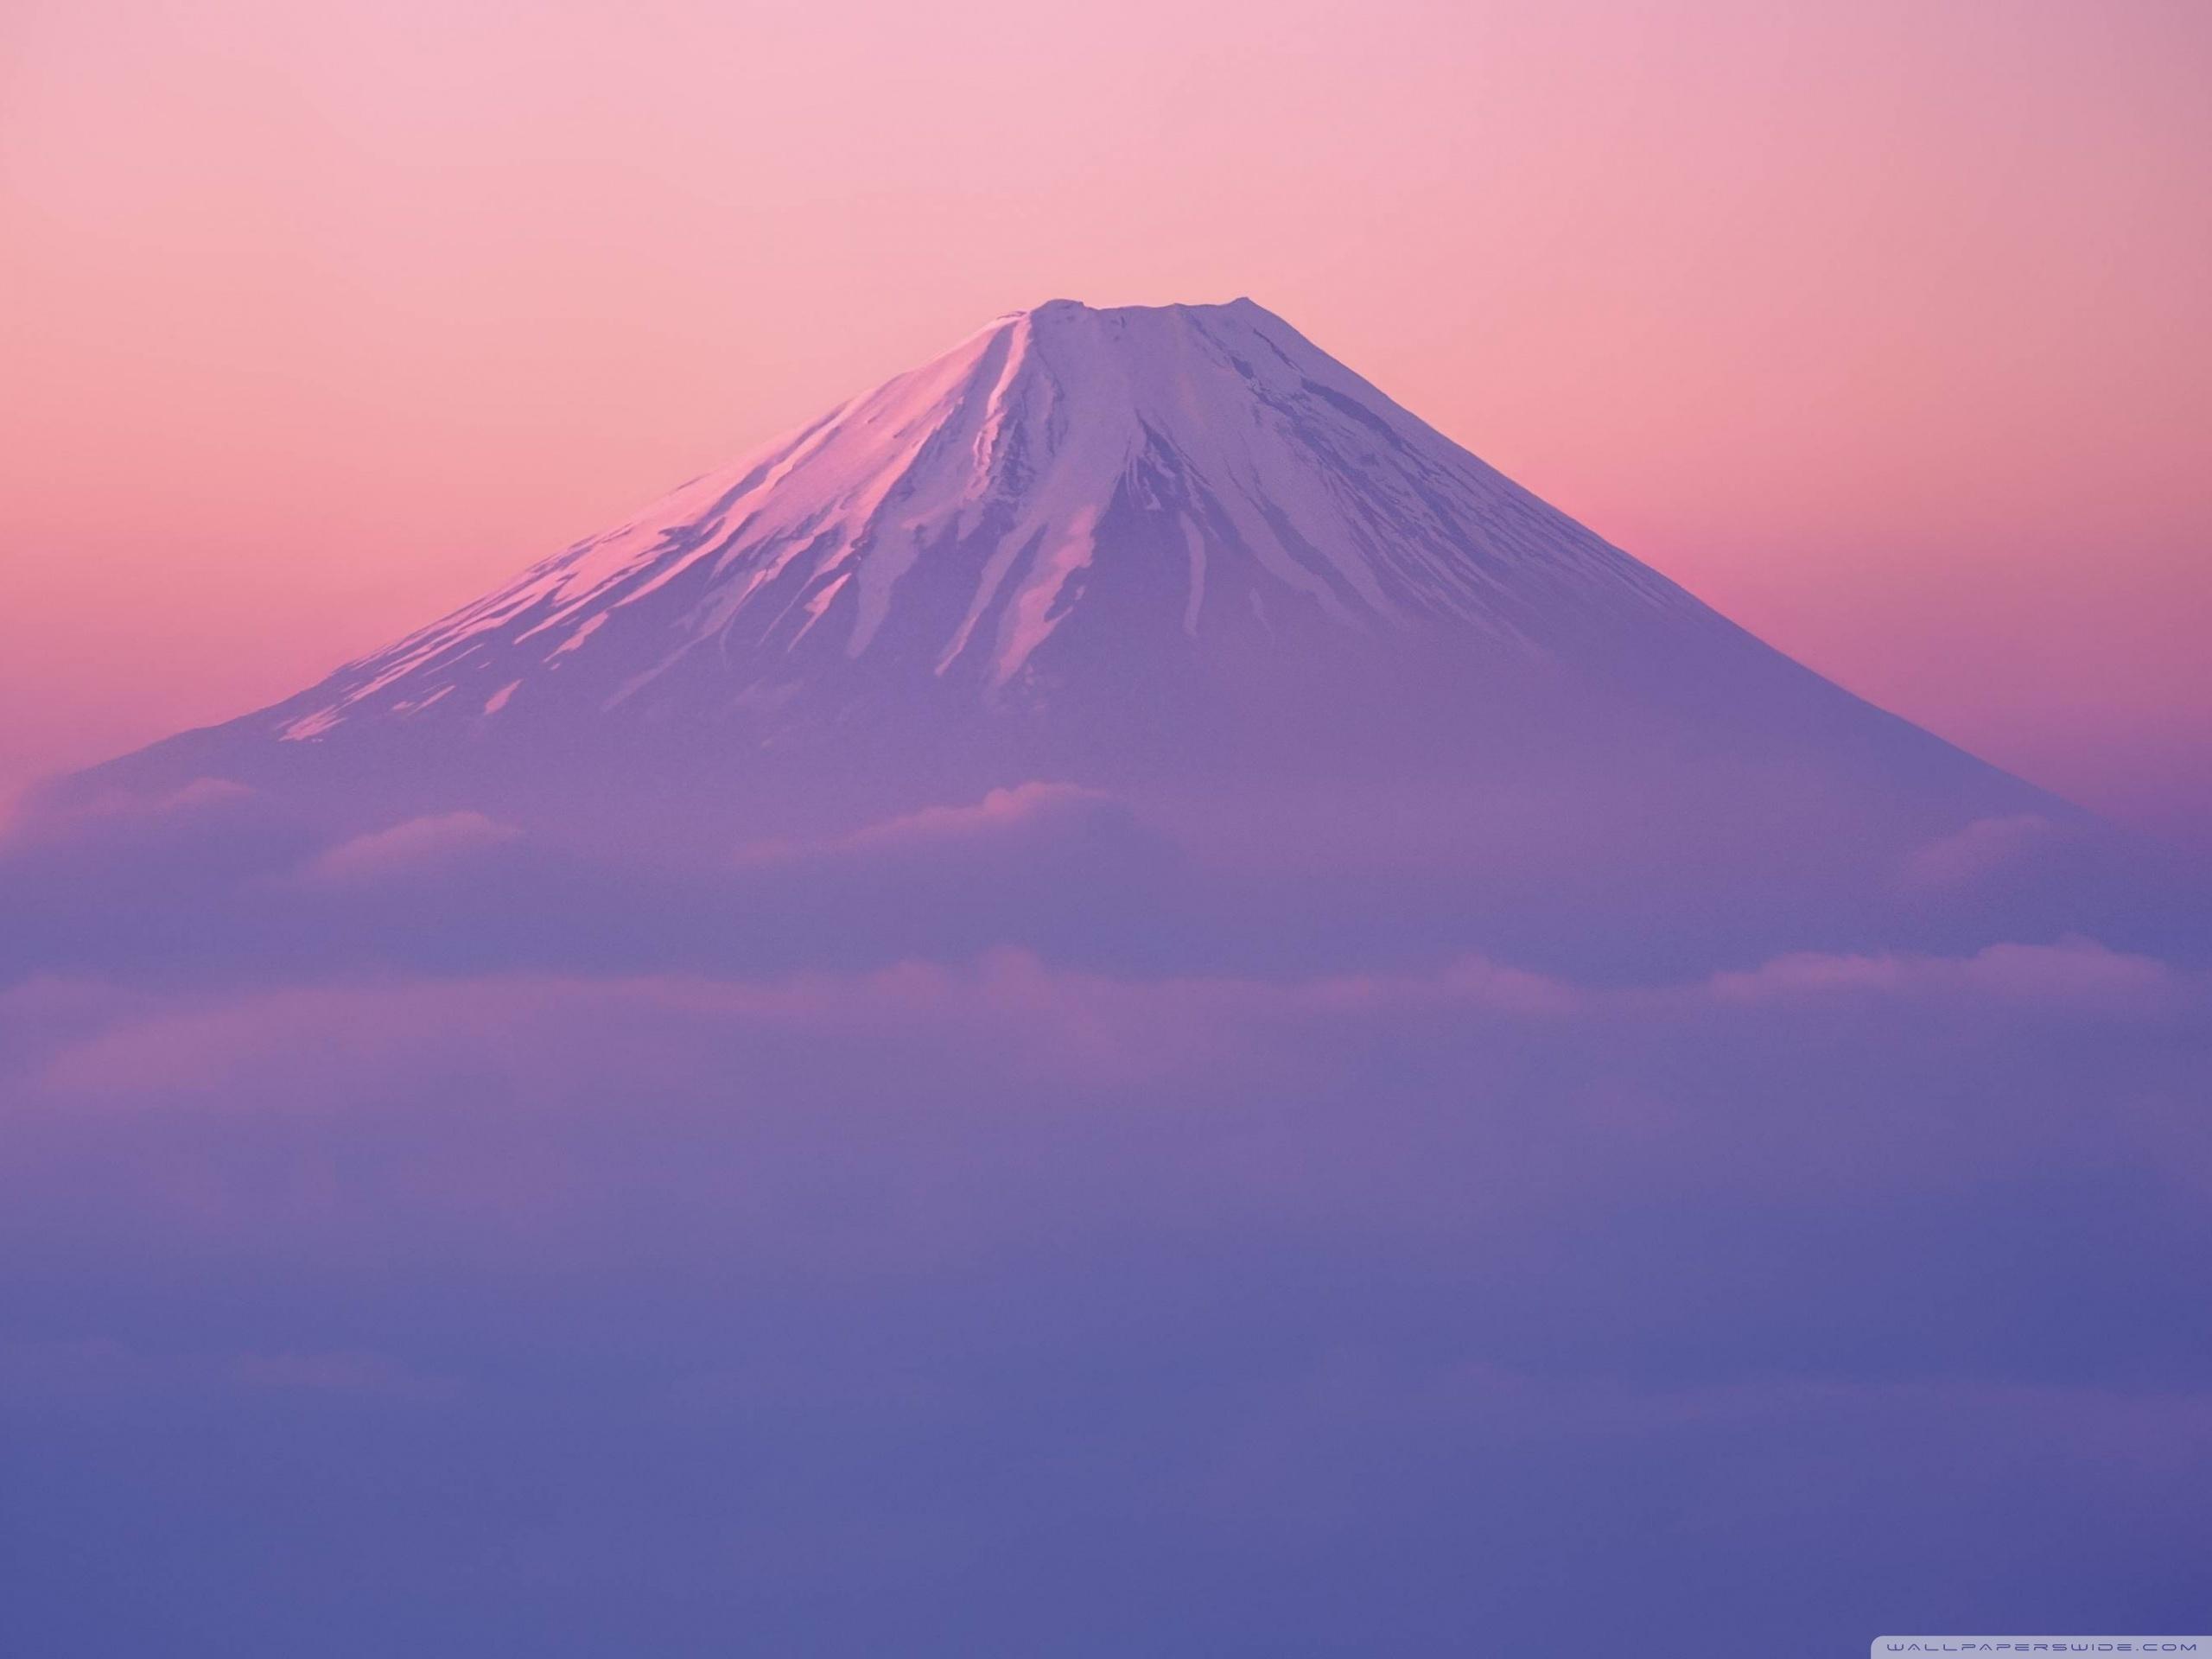 Mount Fuji Wallpaper in Mac OS X Lion ❤ 4K HD Desktop